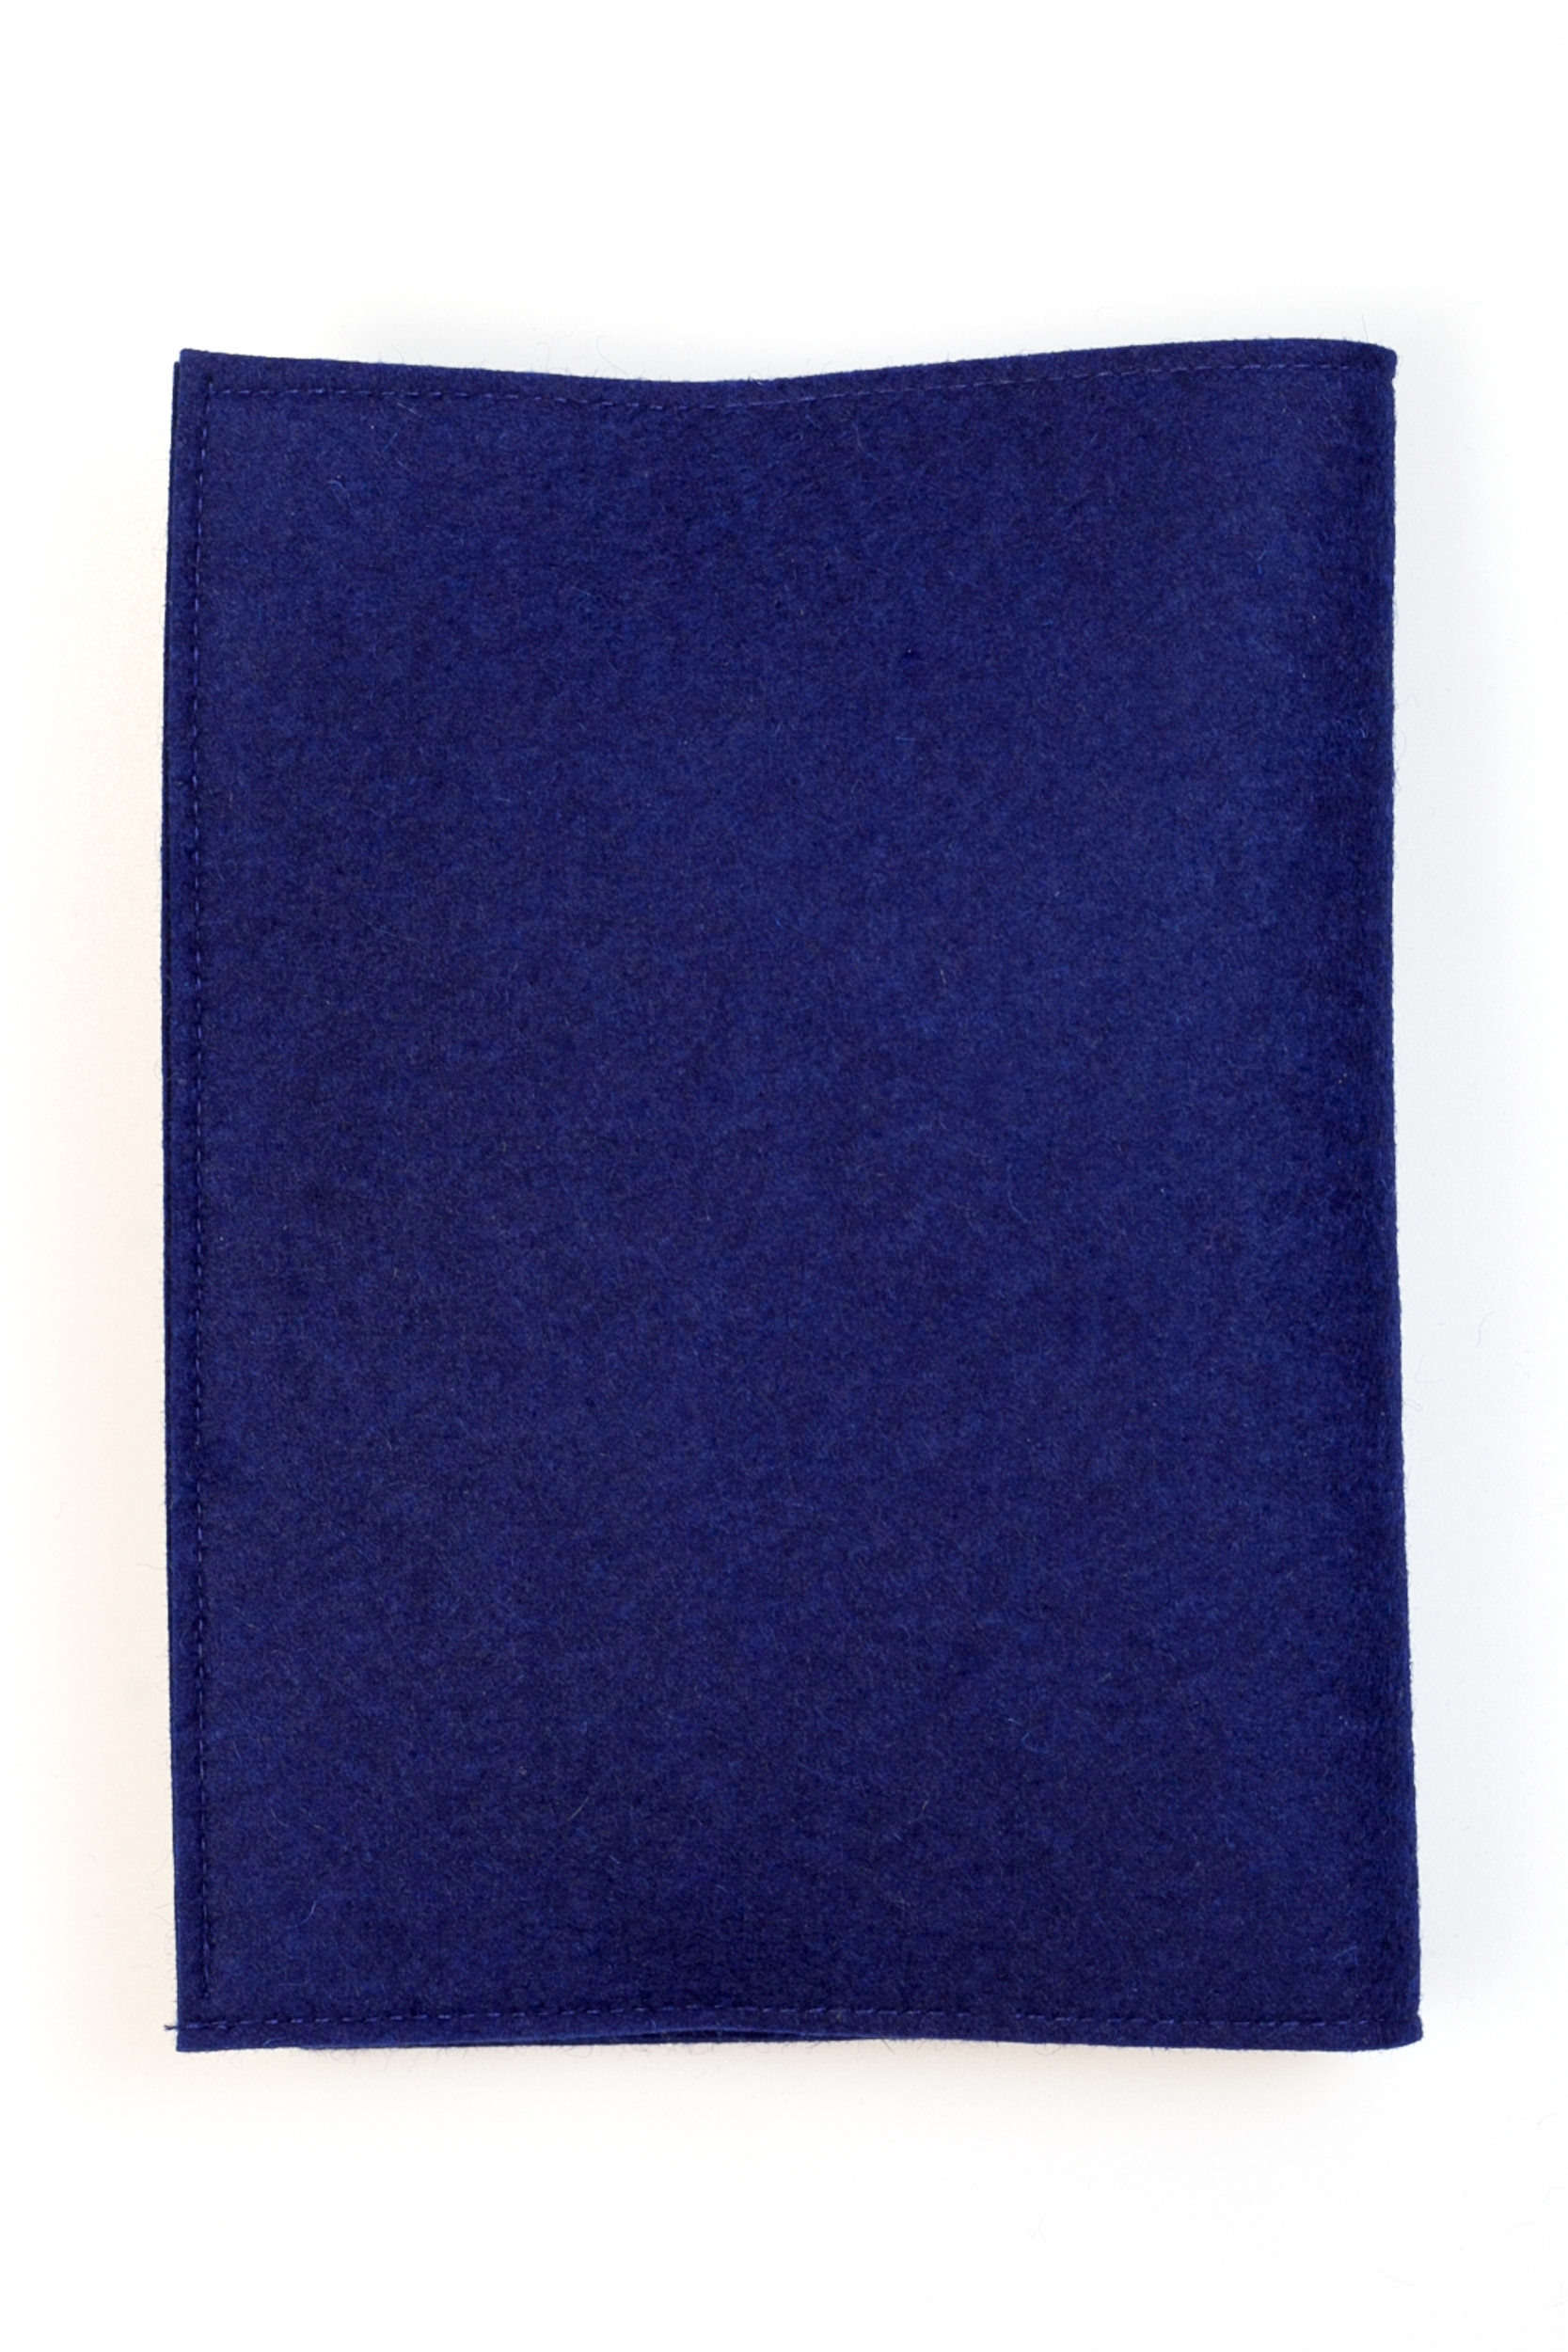 Gotteslobhülle - Blauer Woll-Filz Blau mit Kreuz